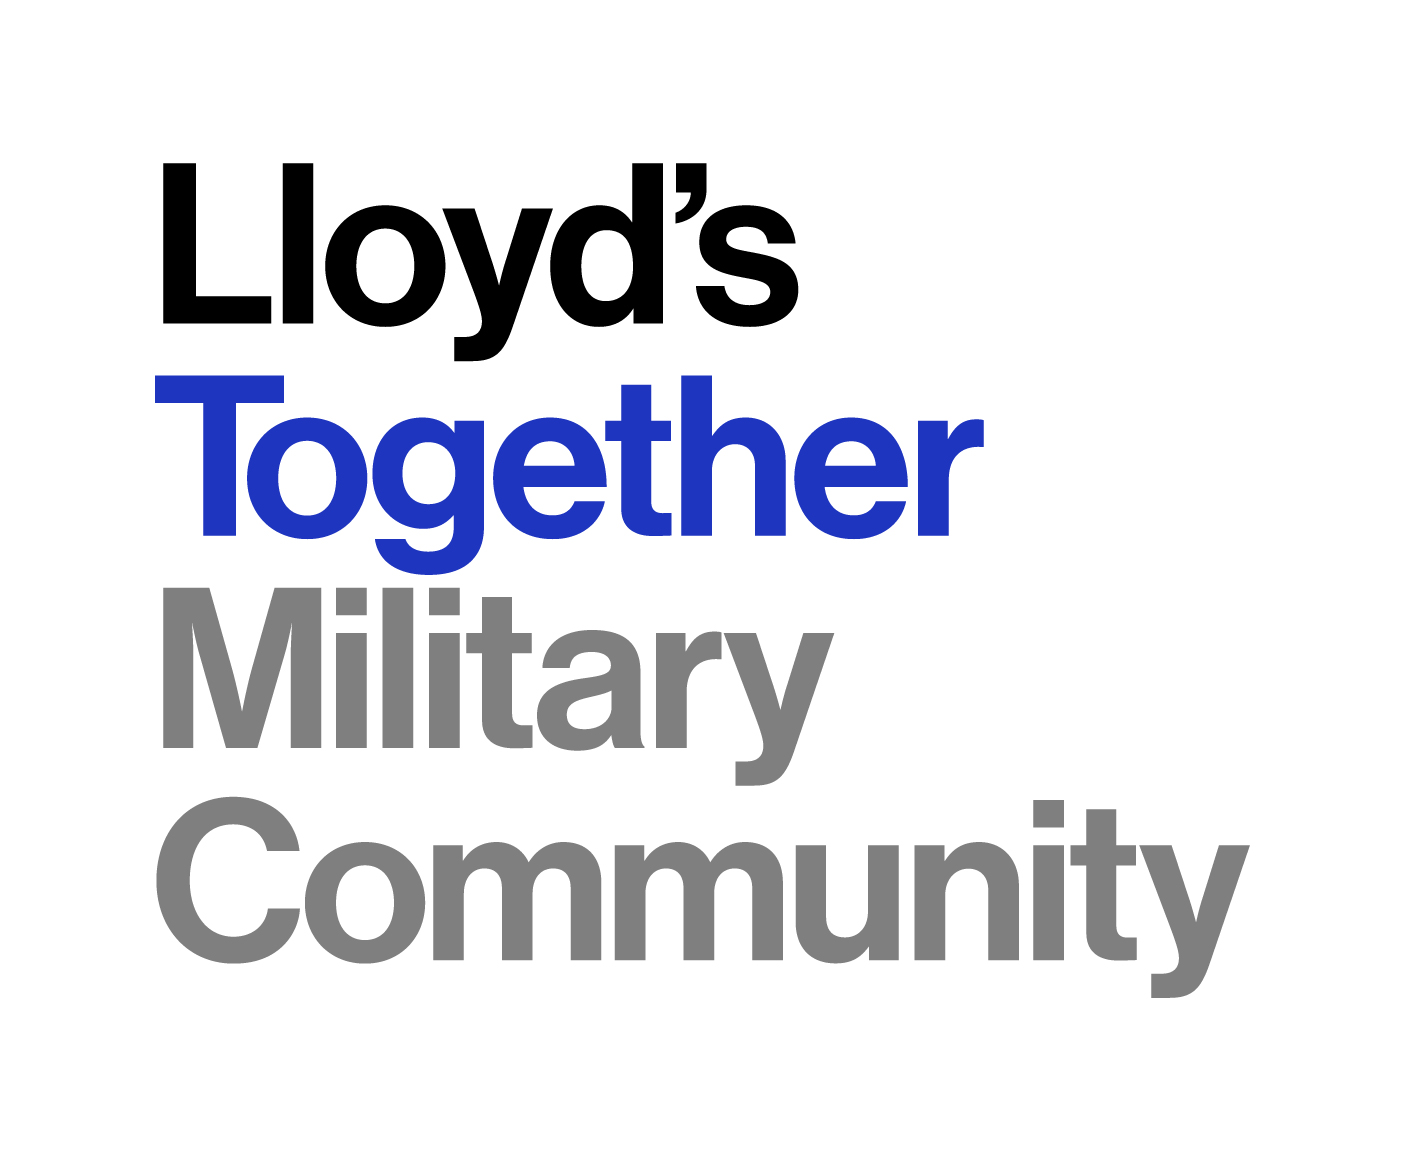 Lloyd's Together Military Community logo